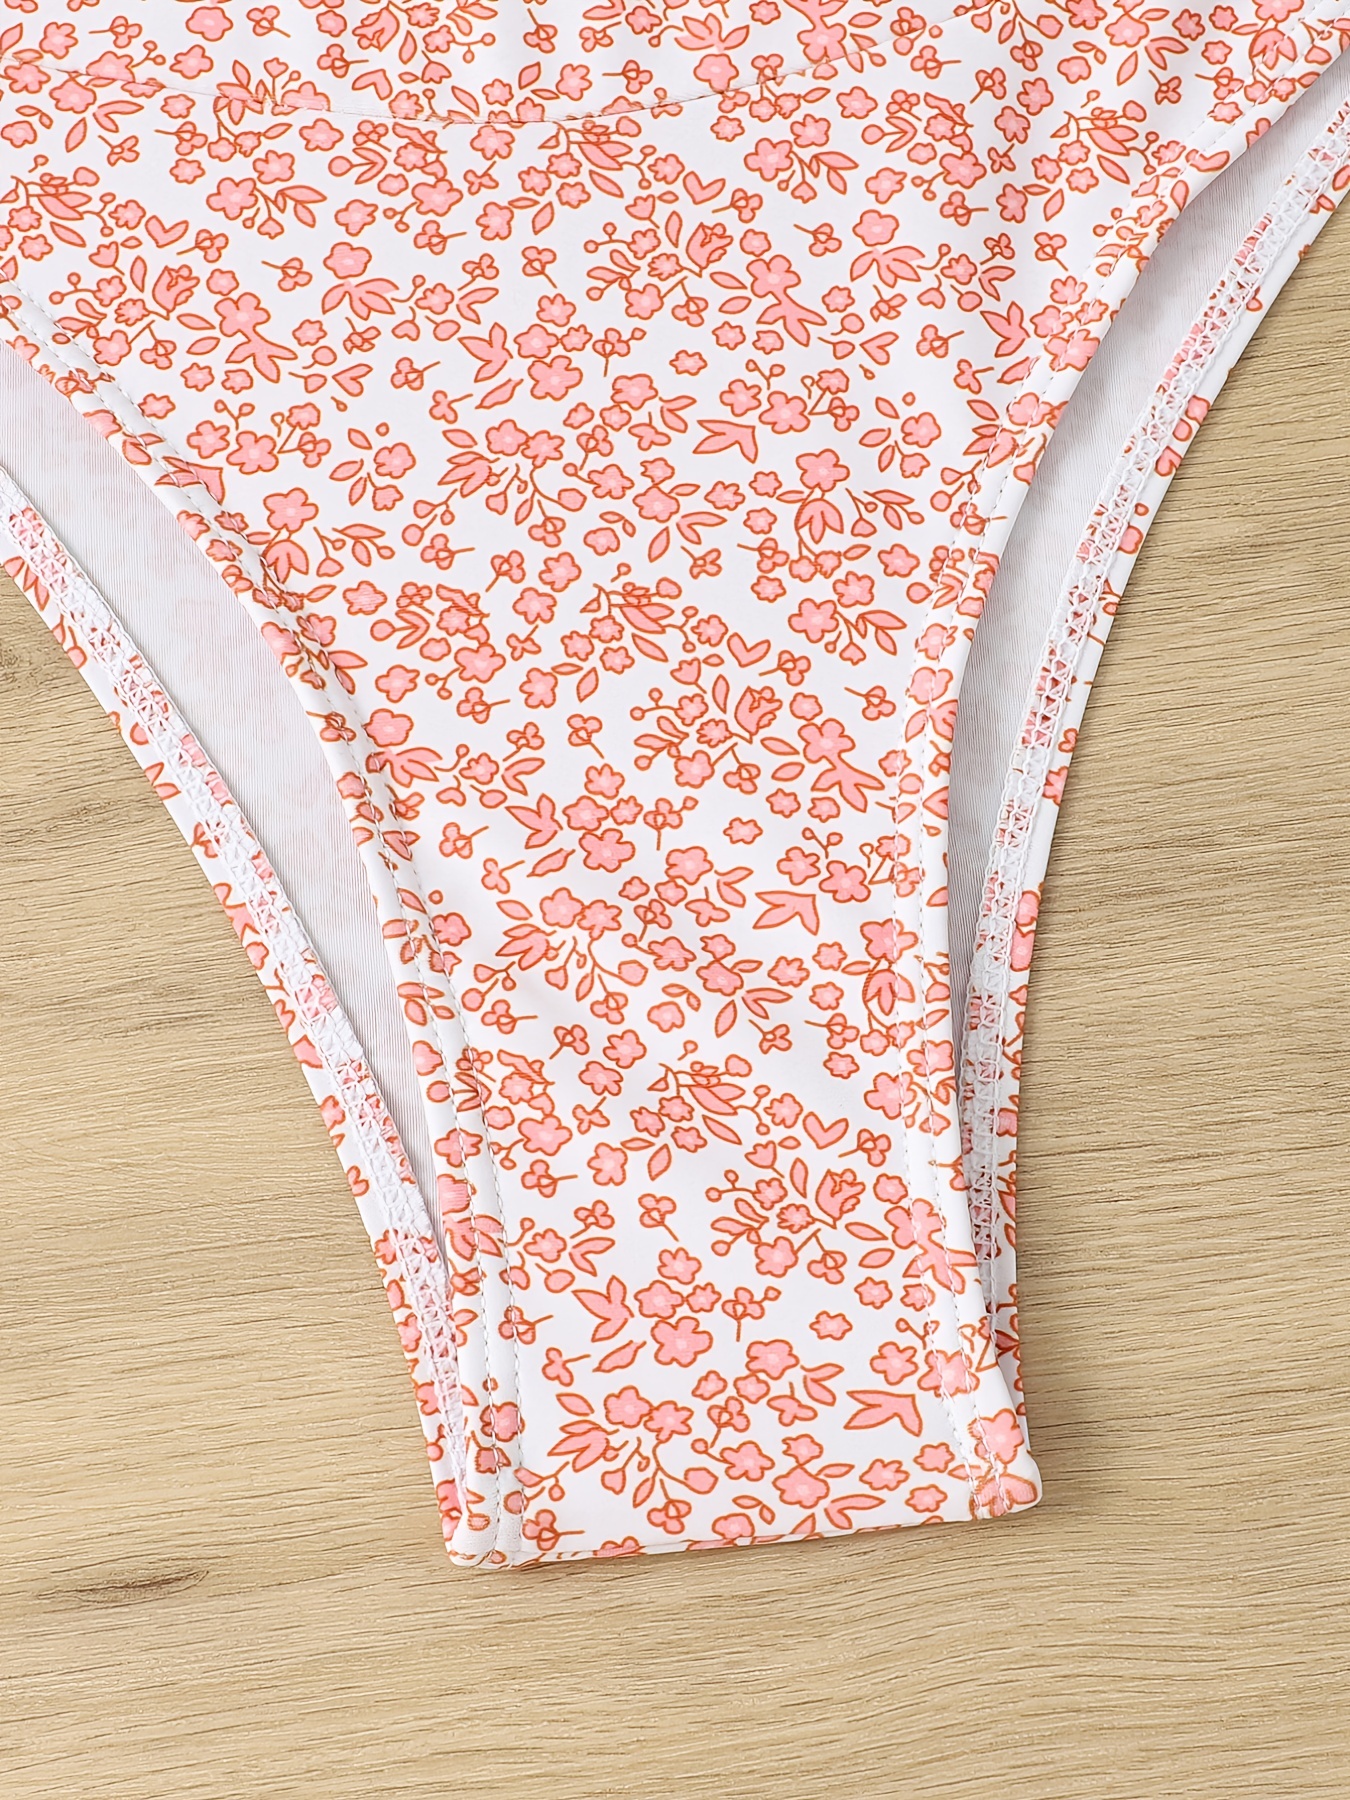 Cotton On, Swim, Orangepink Floral Cotton On Swimsuit Set